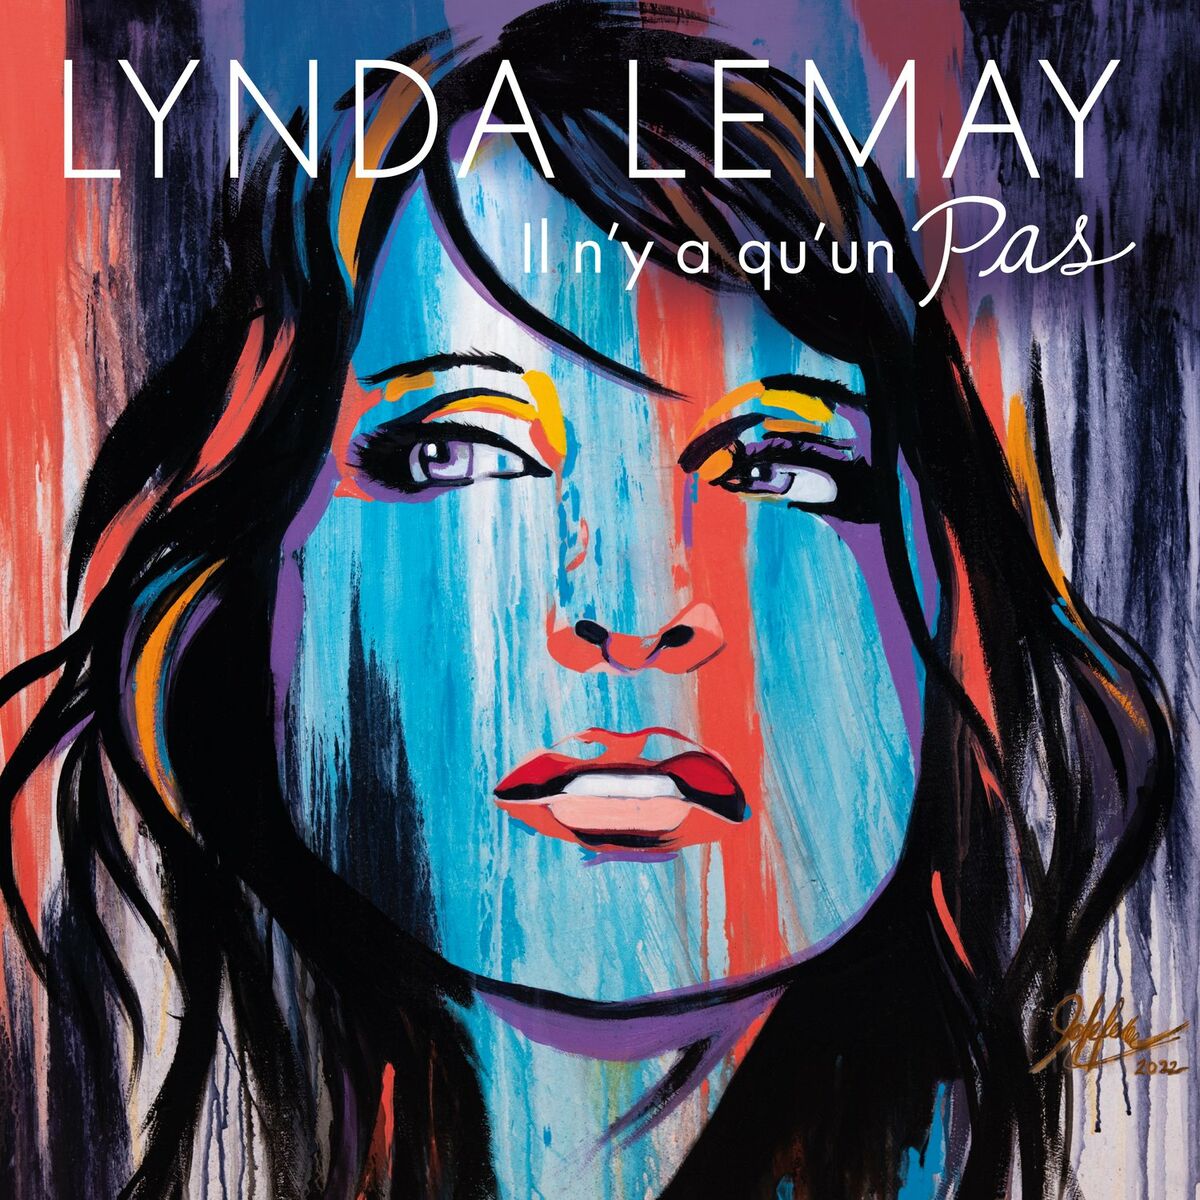 Lynda Lemay: albums, songs, playlists | Listen on Deezer